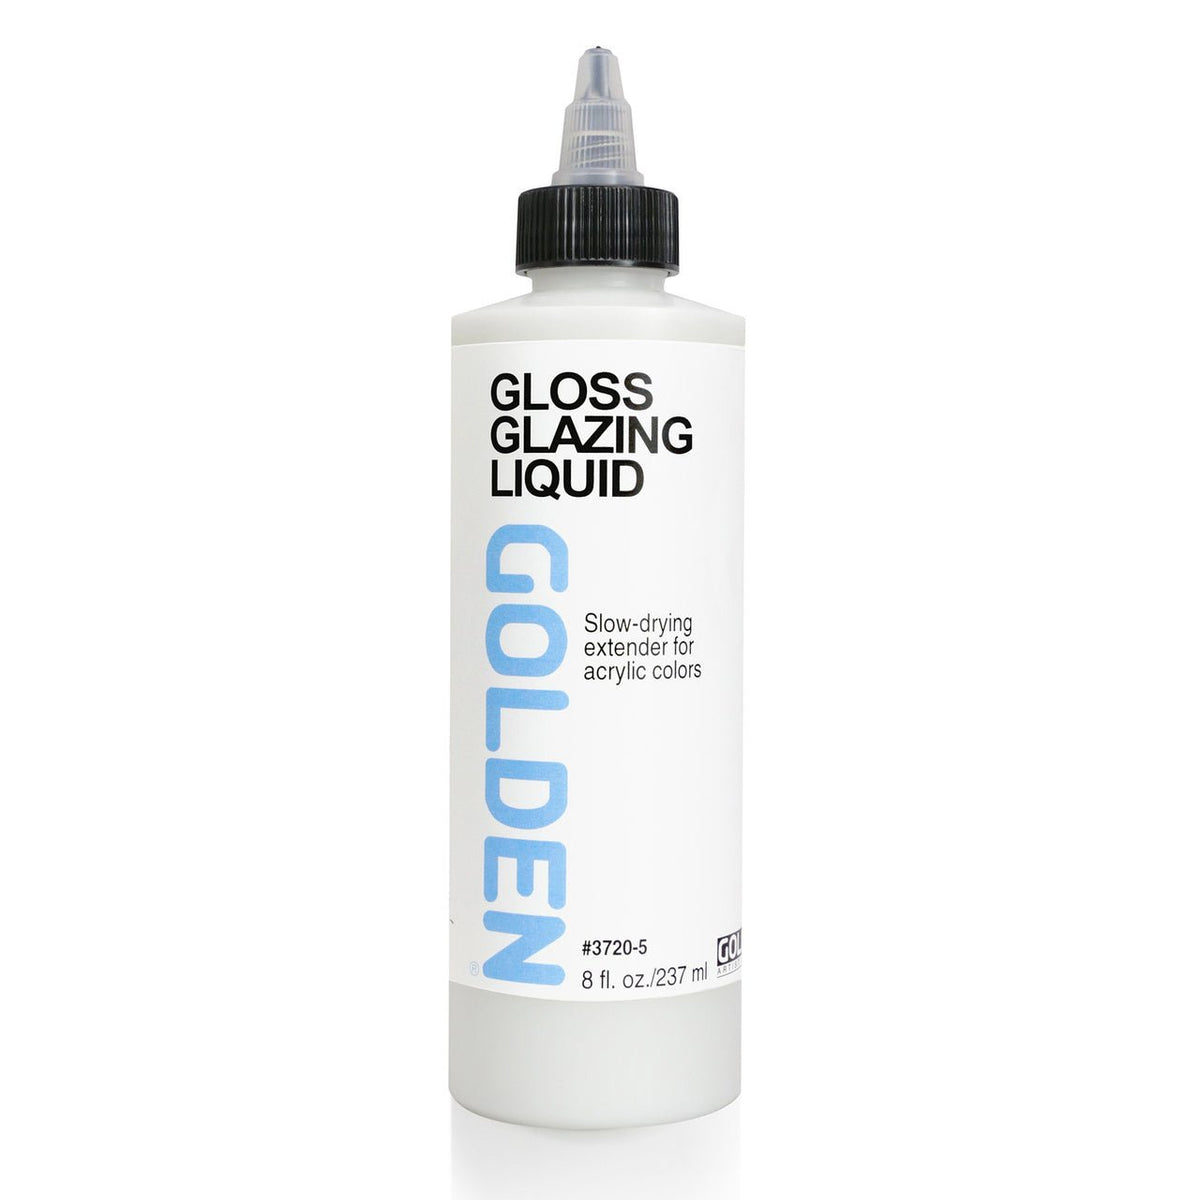 Golden Acrylic Glaze Liquid - Gloss 8 oz - merriartist.com